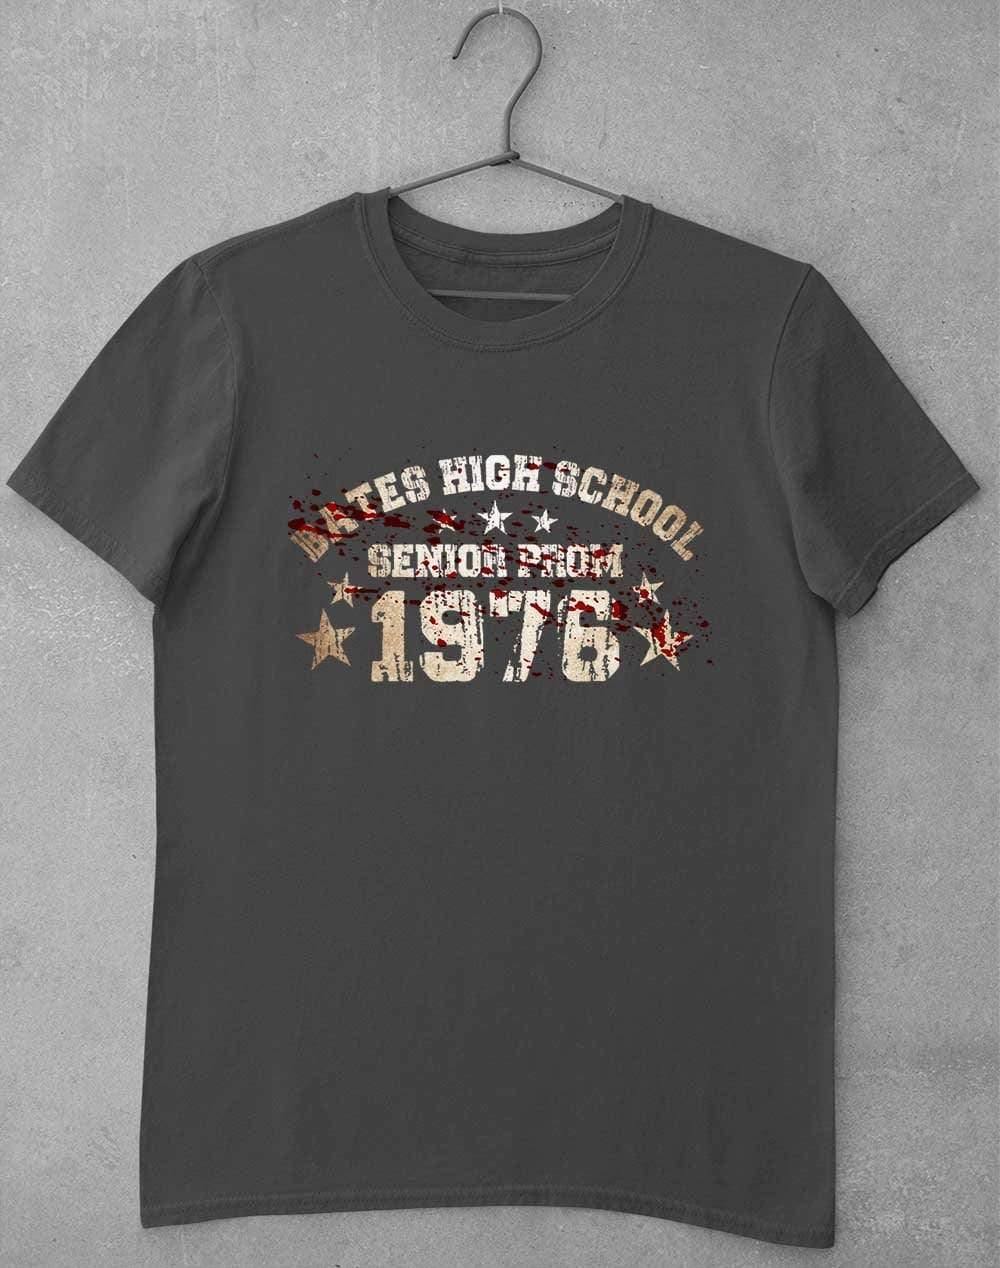 Bates High School Prom 1976 T-Shirt S / Charcoal  - Off World Tees